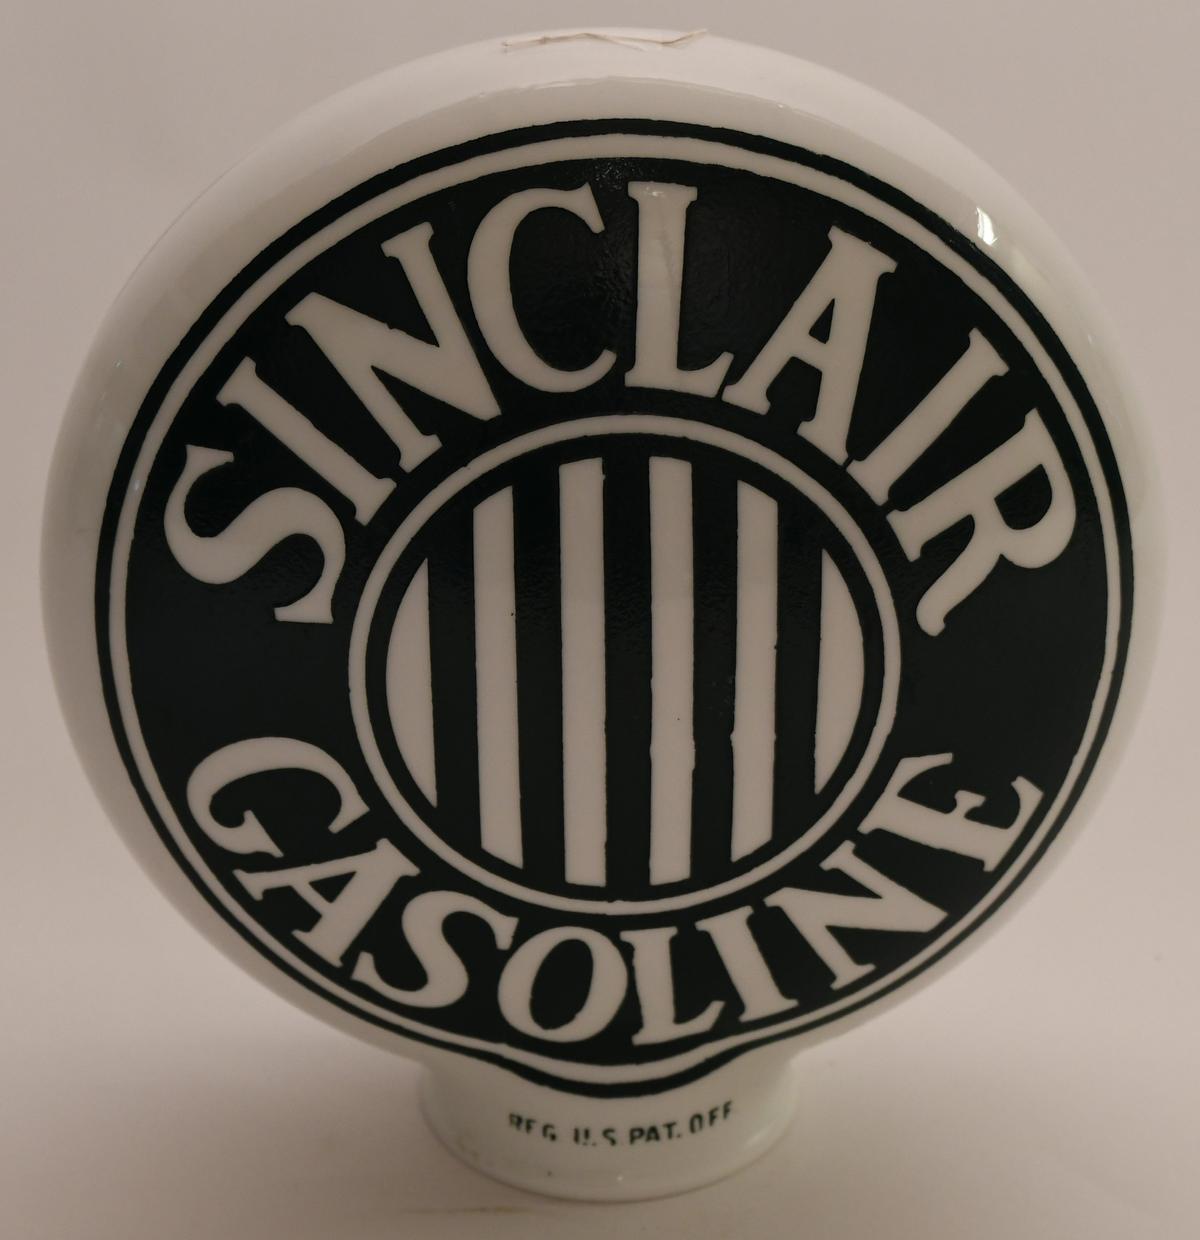 Sinclair Gasoline Baked OP Globe NOS